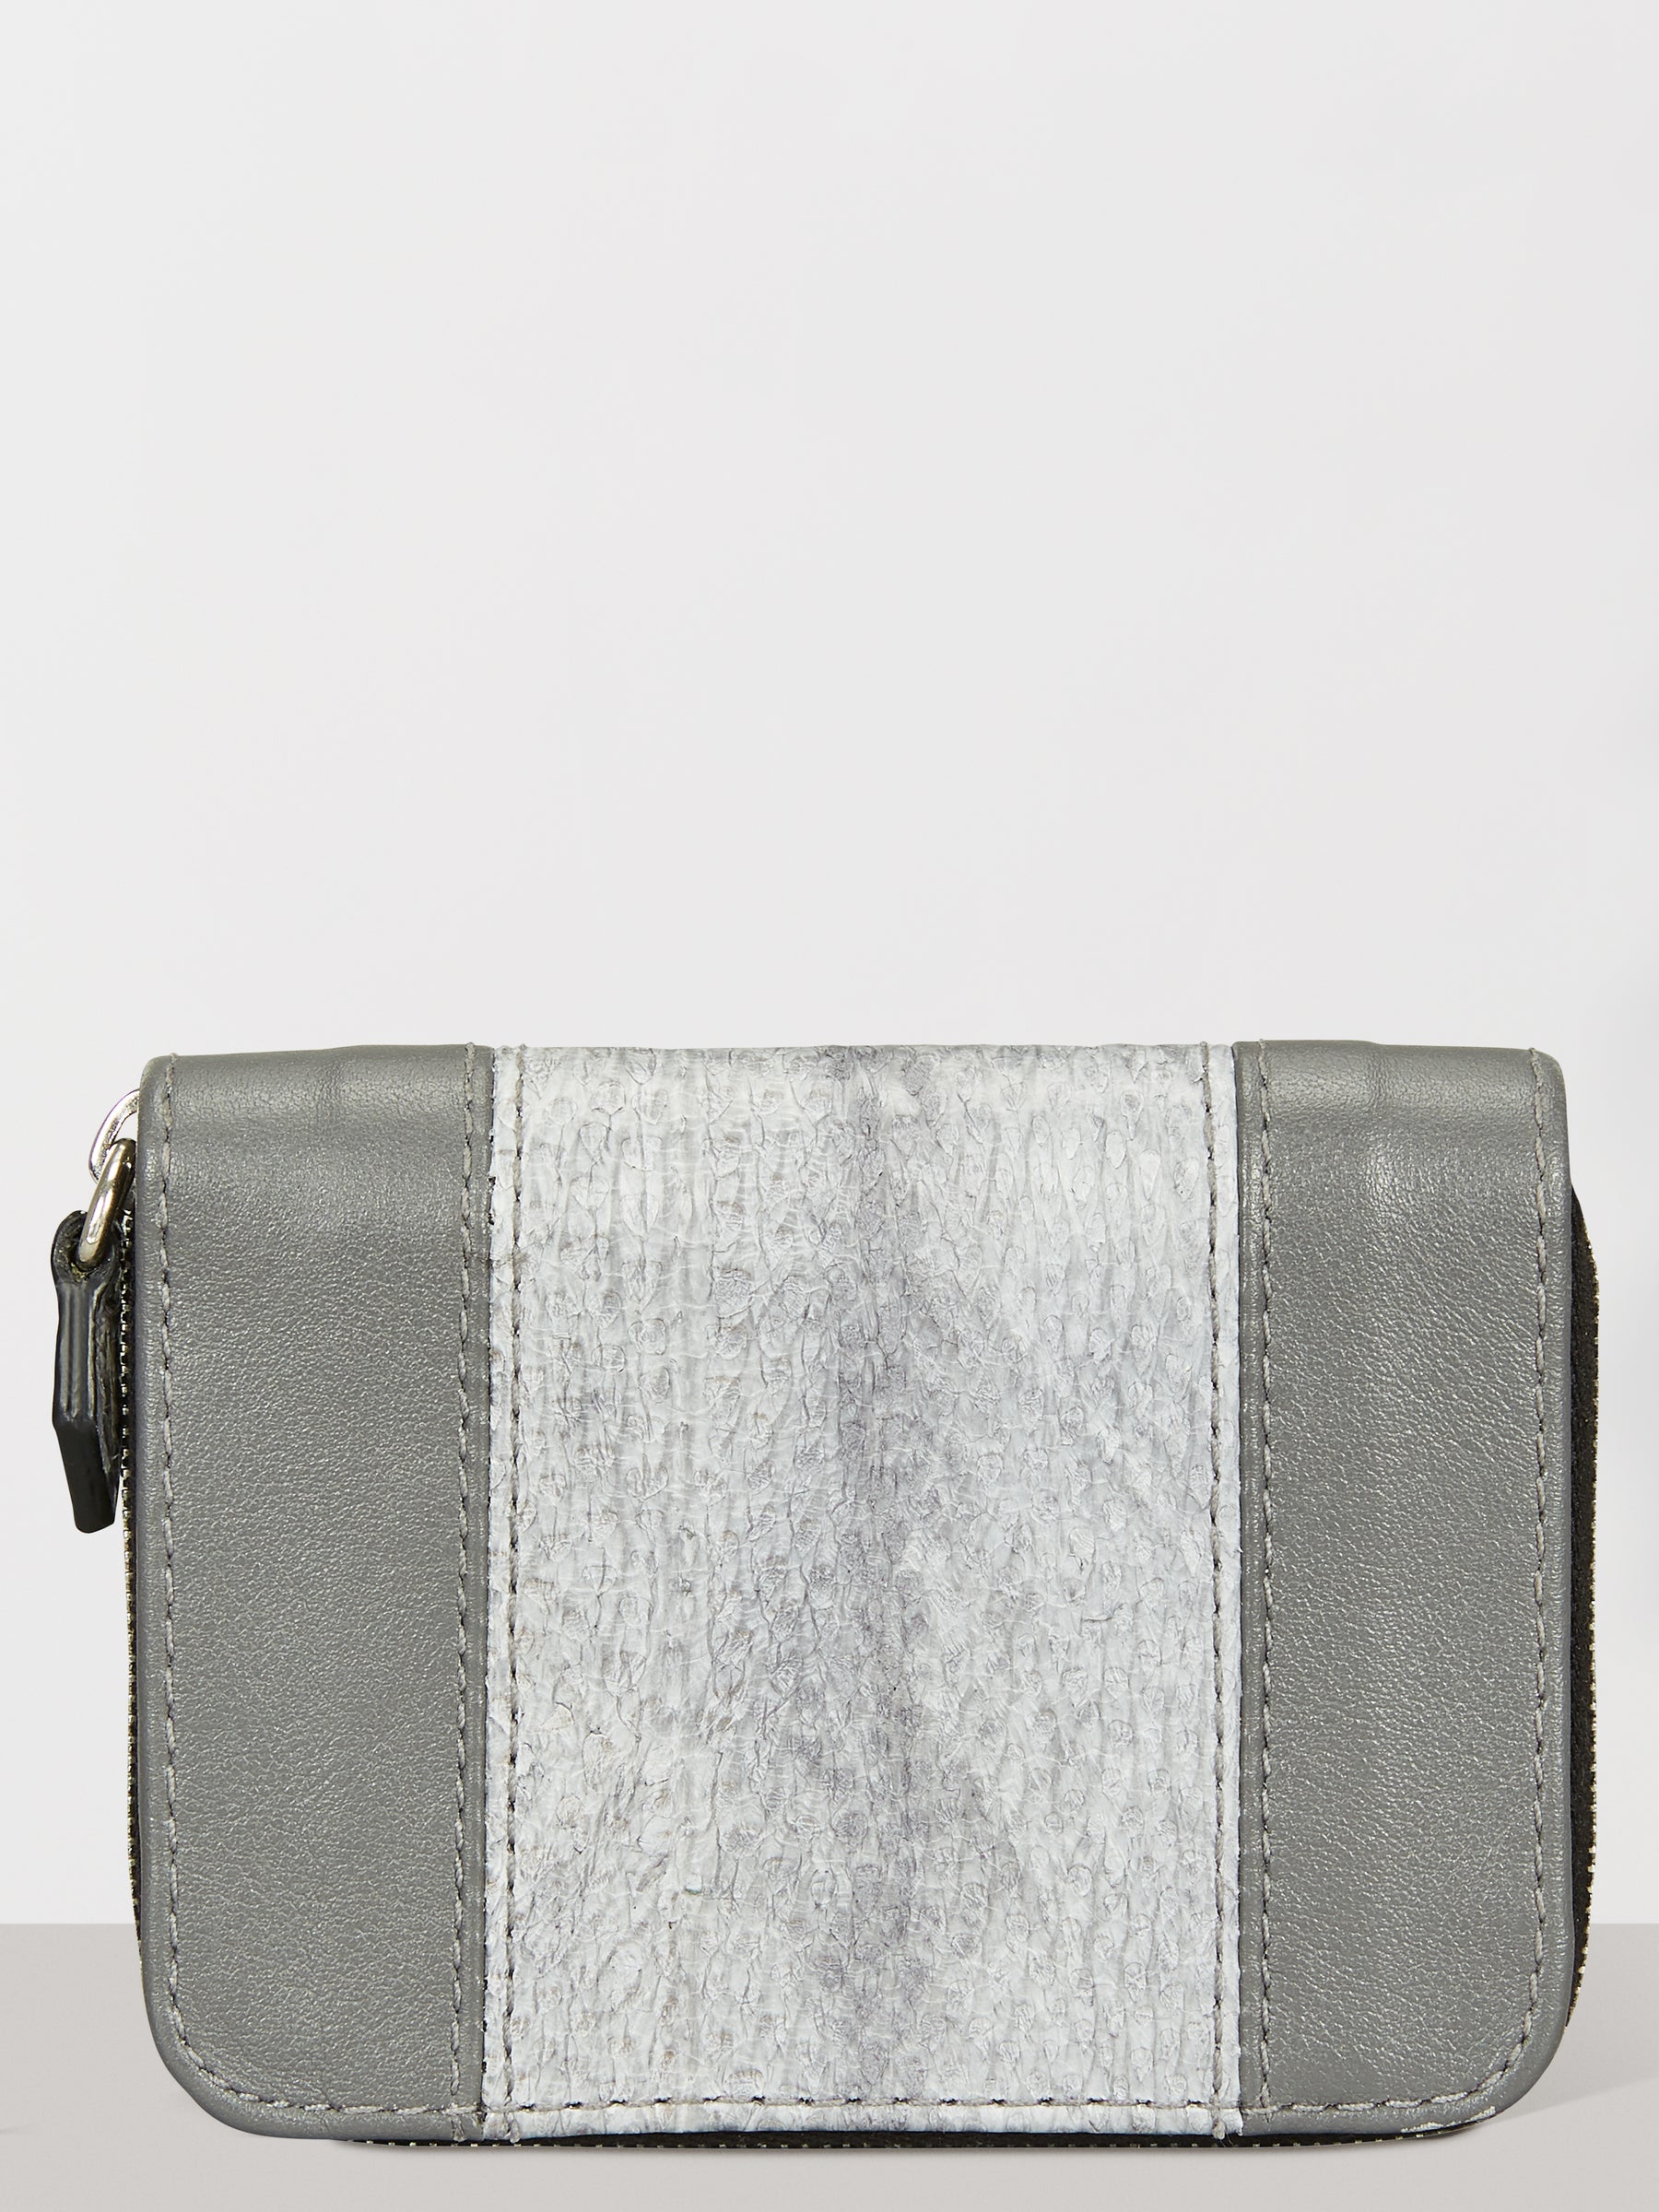 Zip Case Grey Aquatic Leather Card Holder